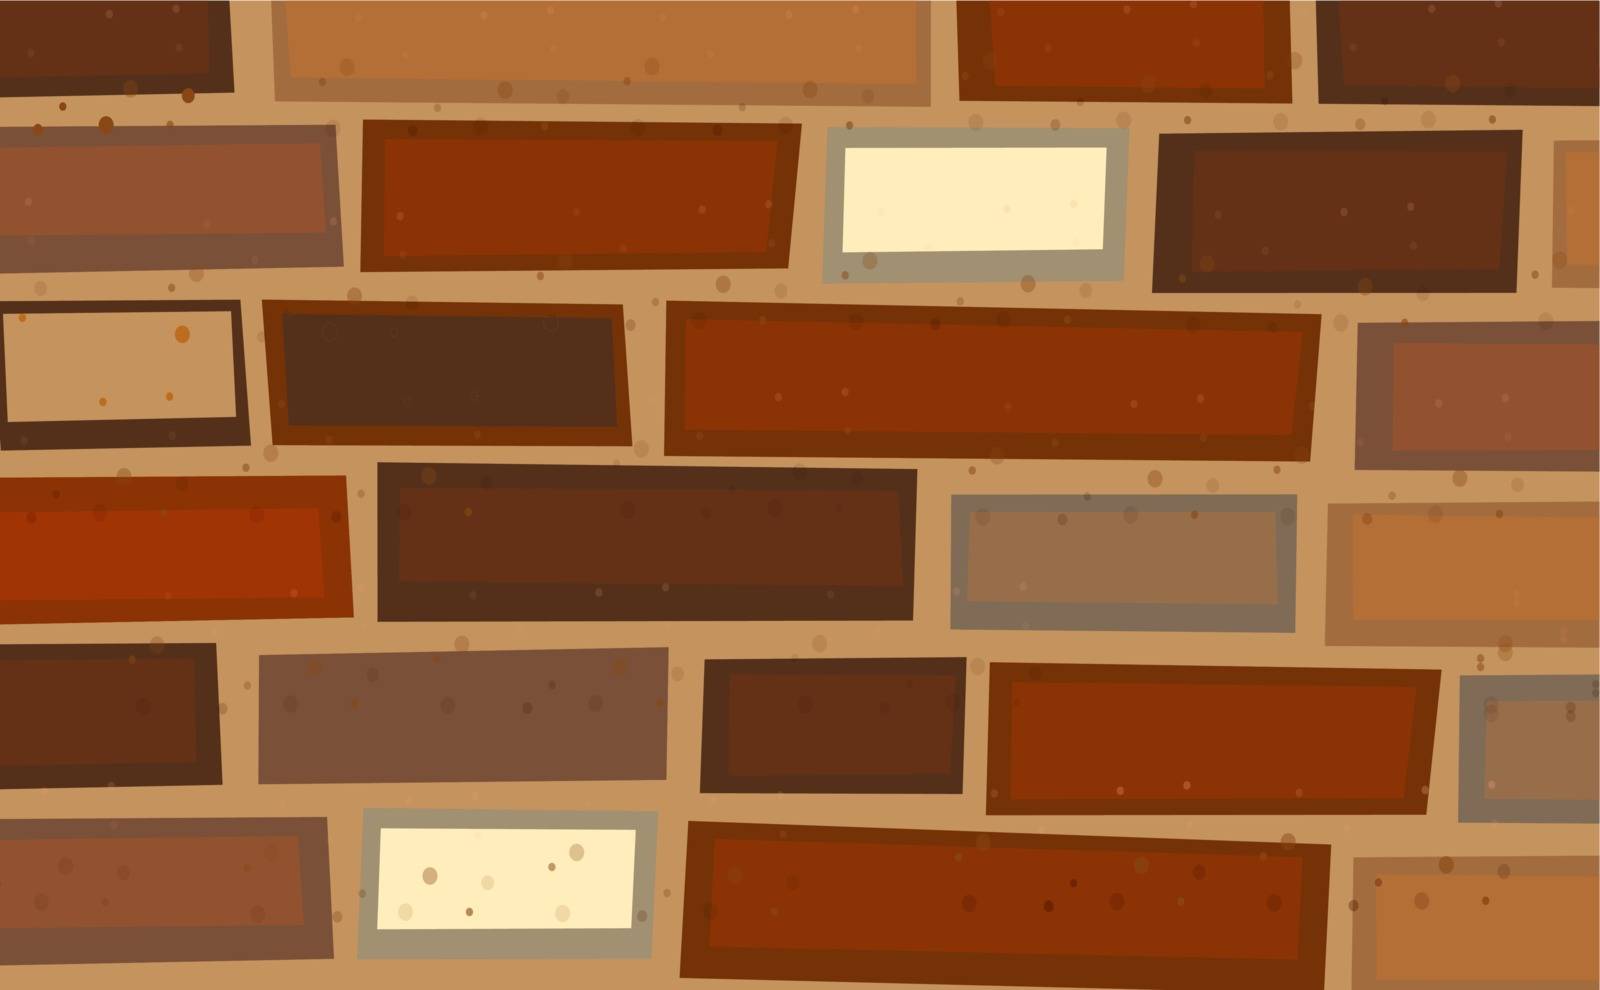 Illustraiton of a brick wall